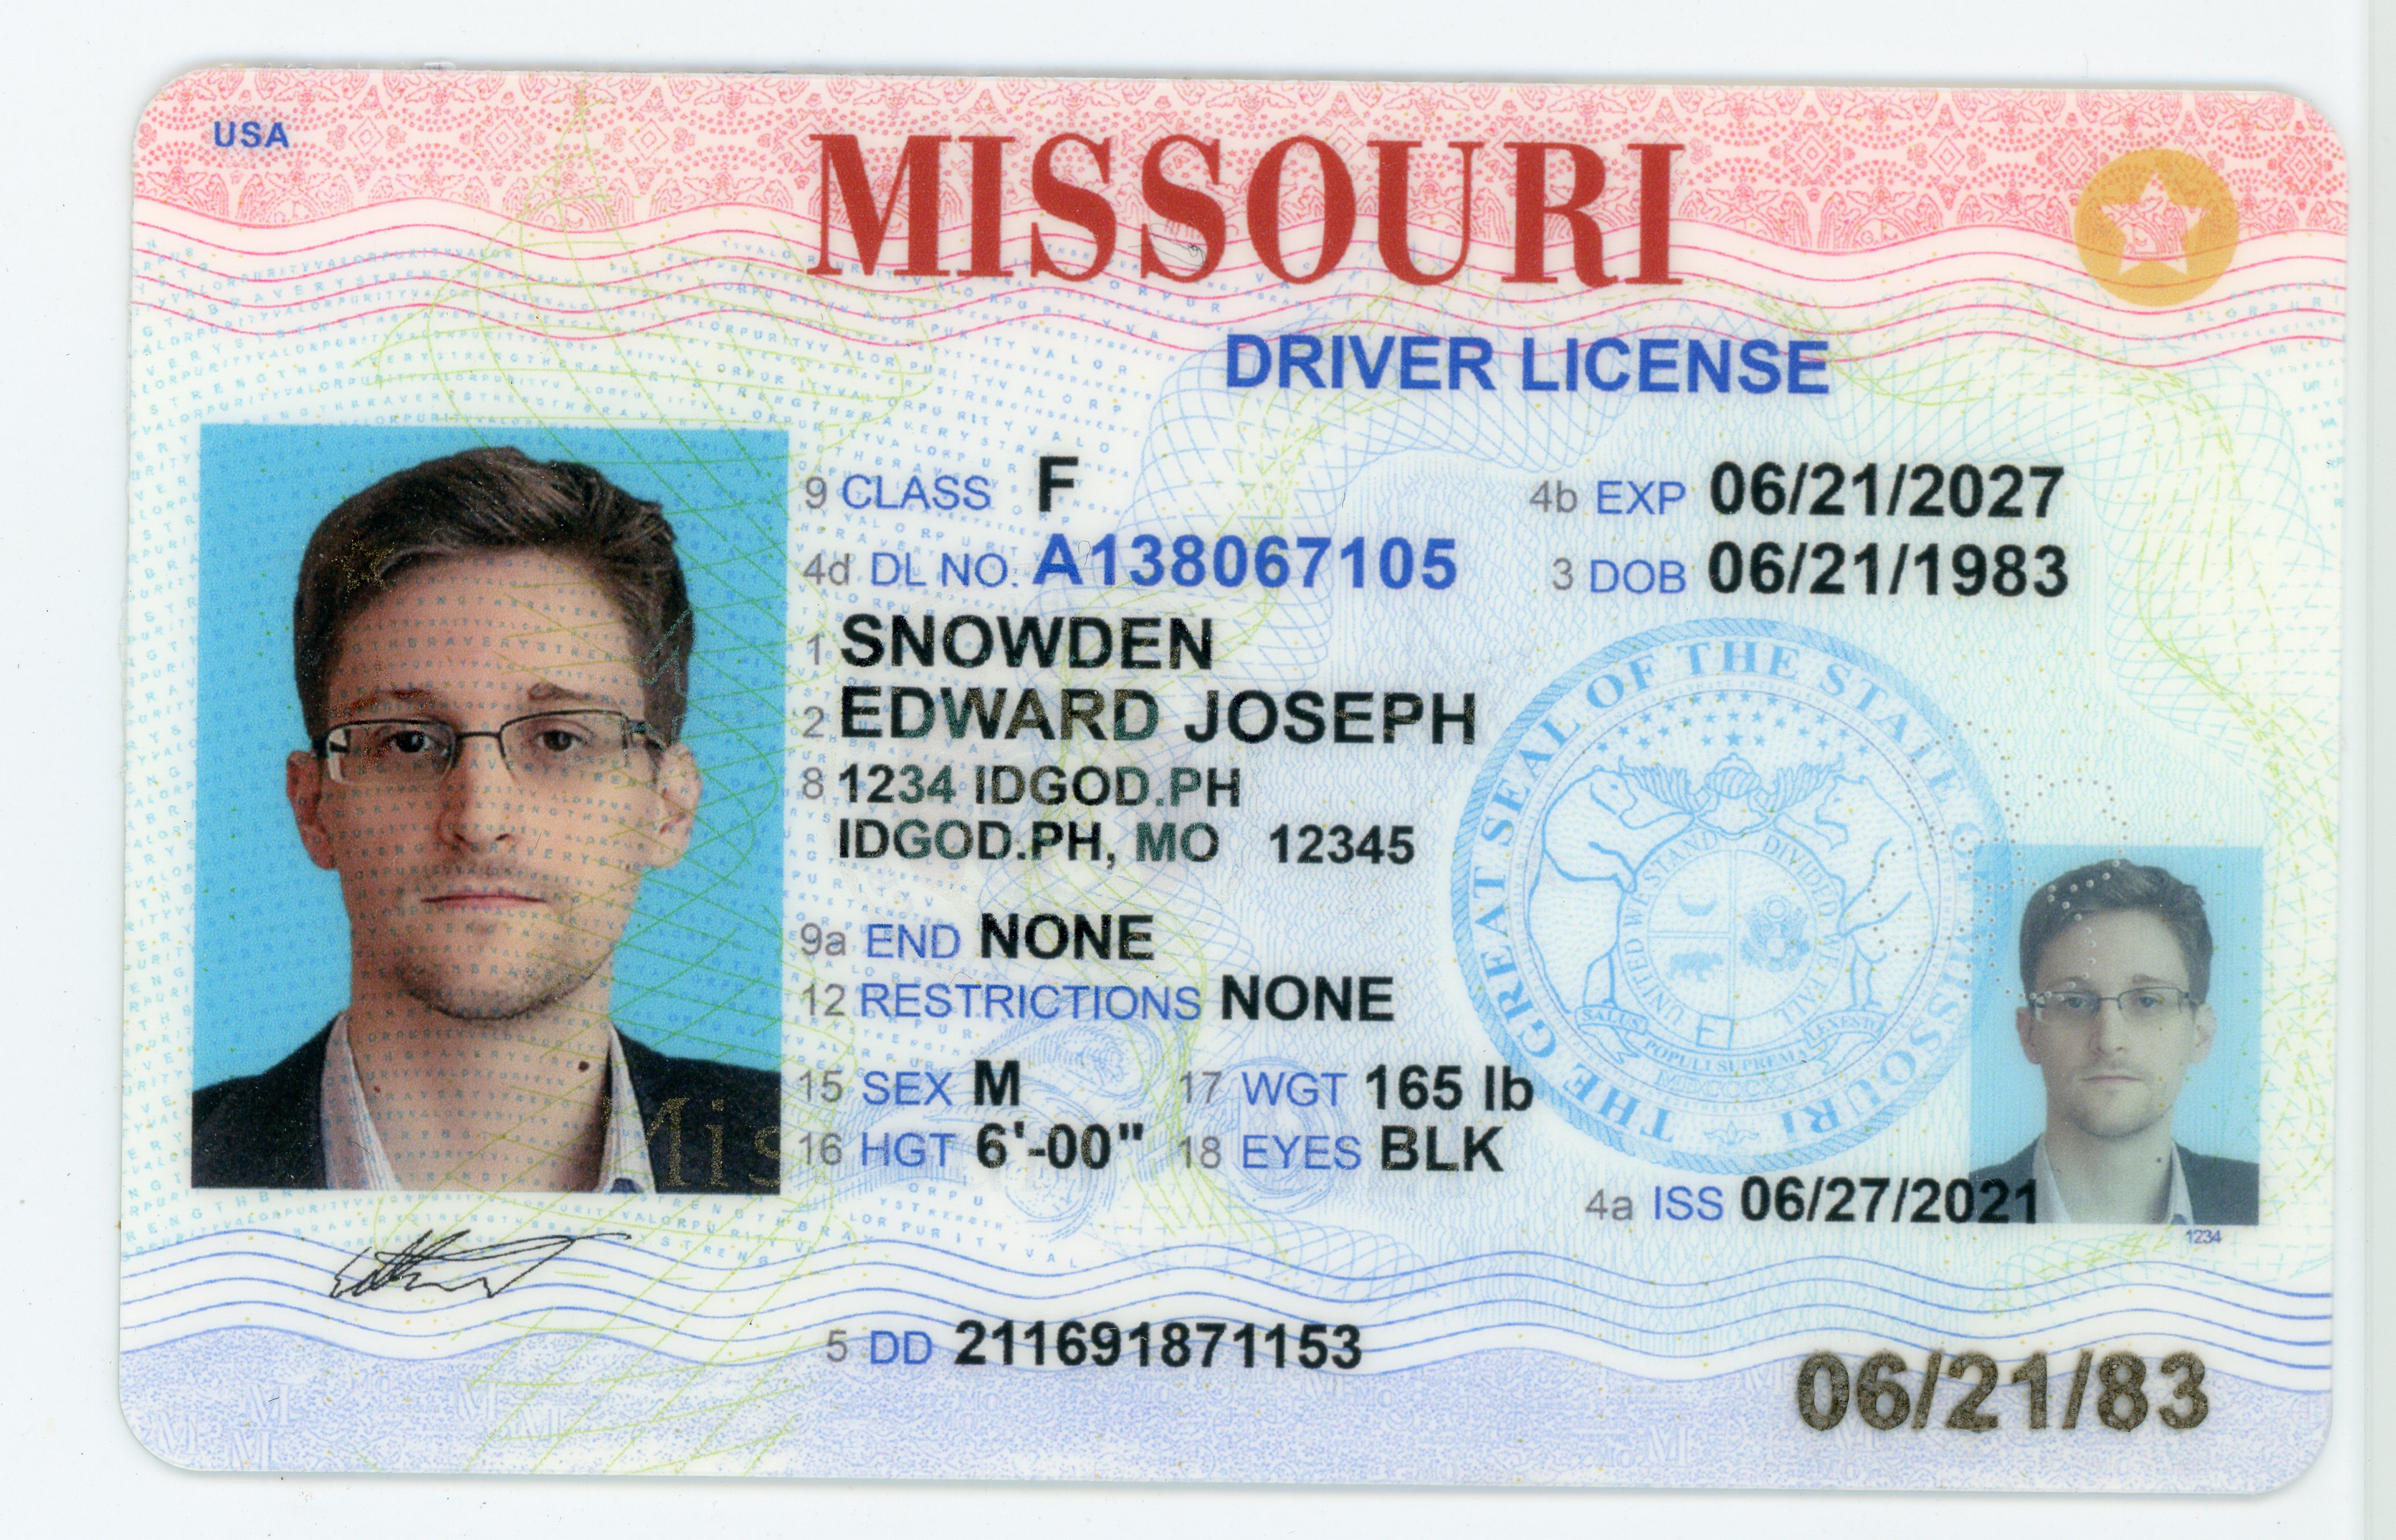 Sample fake IDs idgod.ph